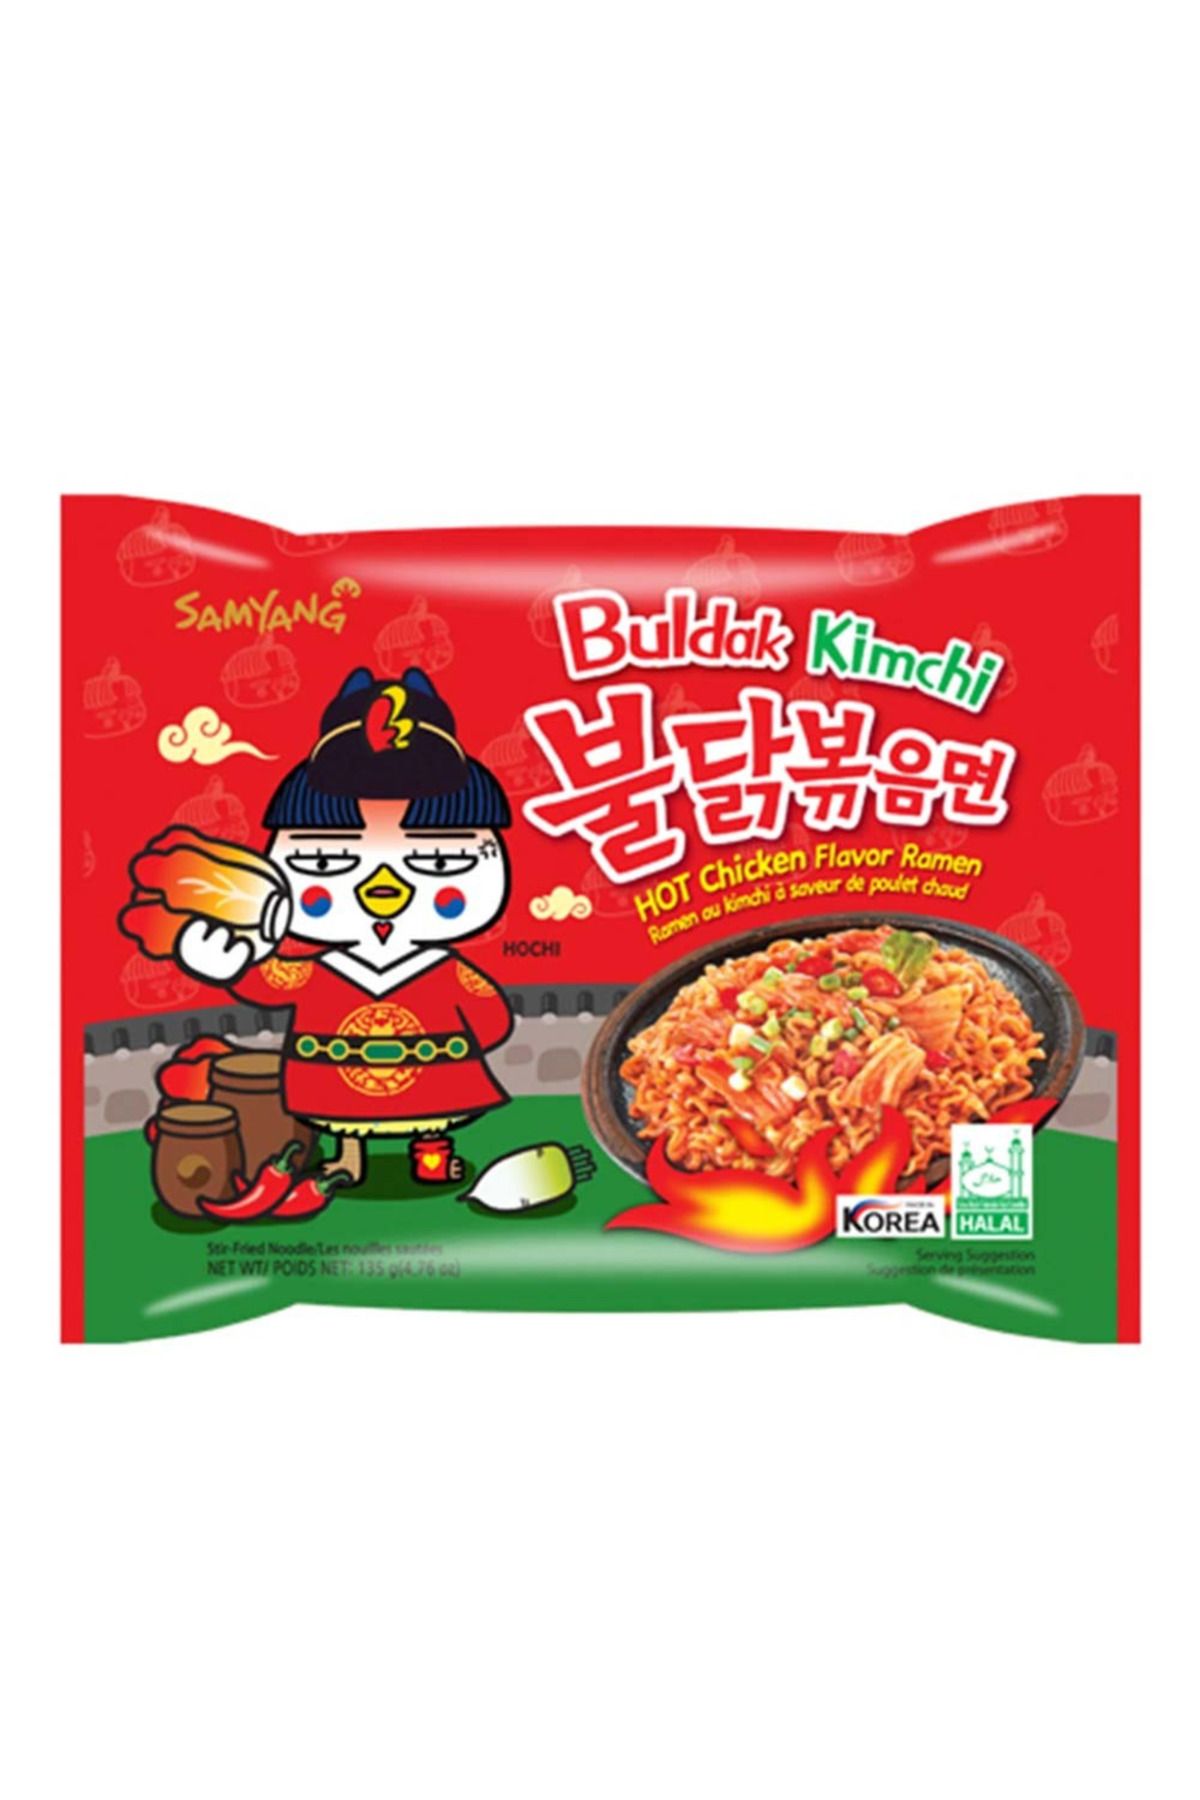 samyang Buldak Kimchi Hot Chicken Flavor Ramen,140g (amerikan Cheetos Hediyeli )